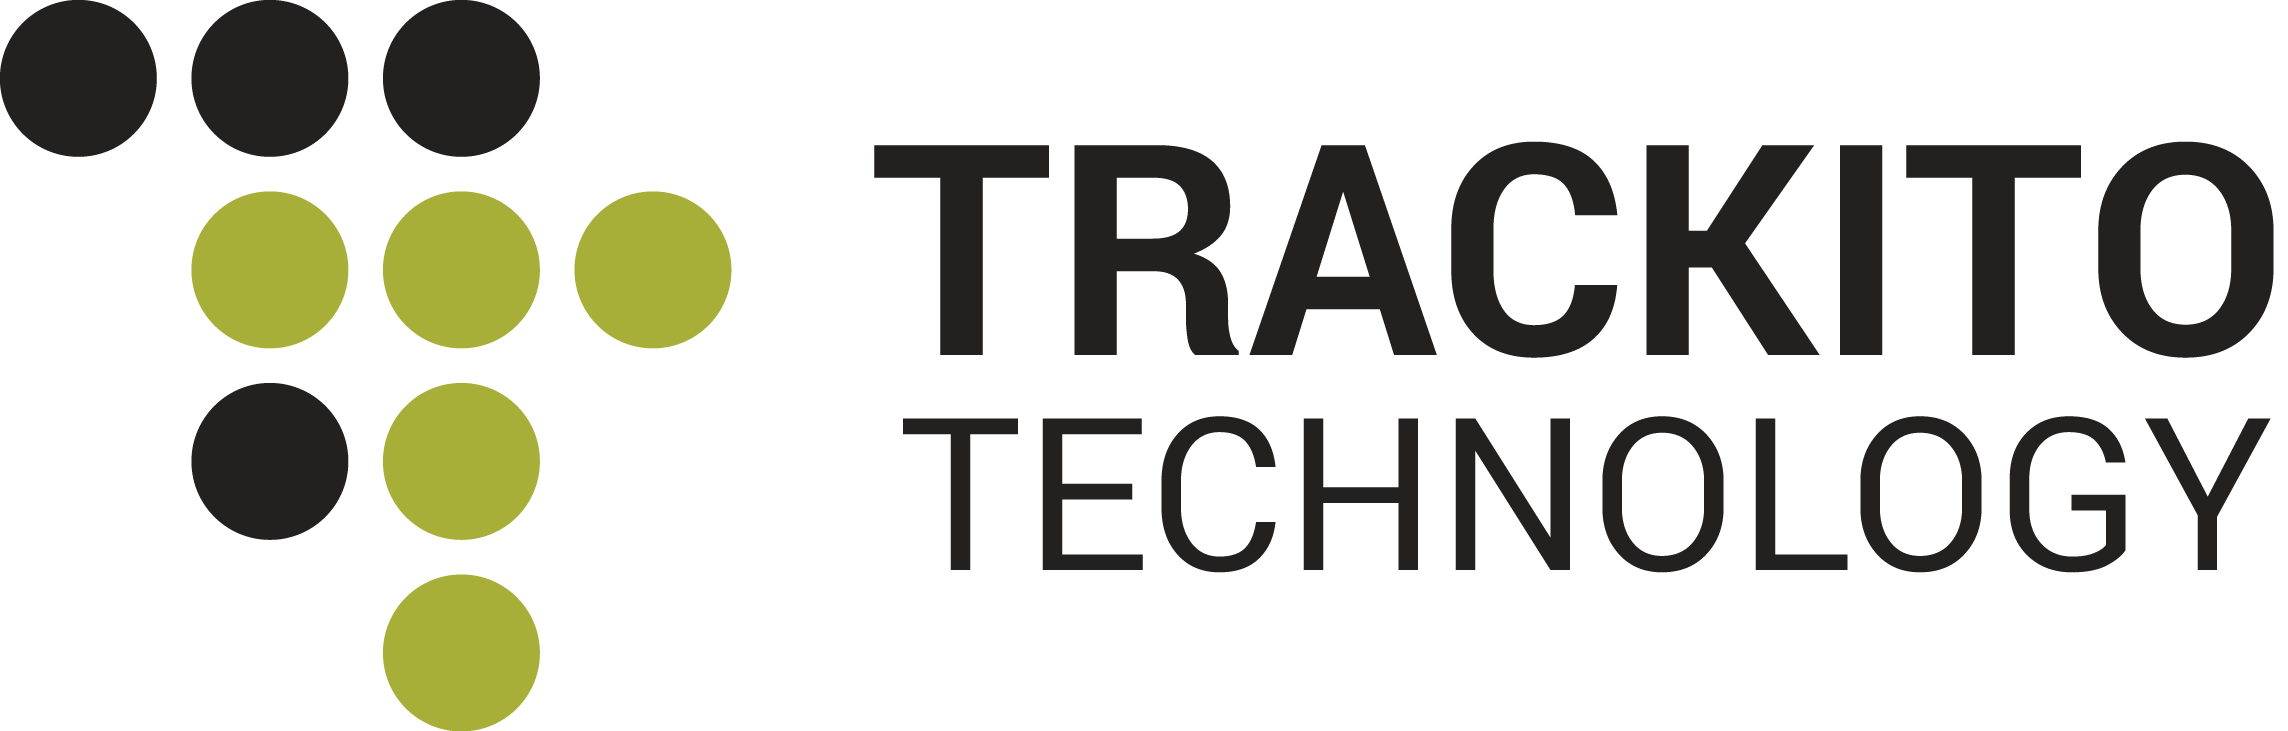 Trackito Bike :: Trackito Technology E-shop